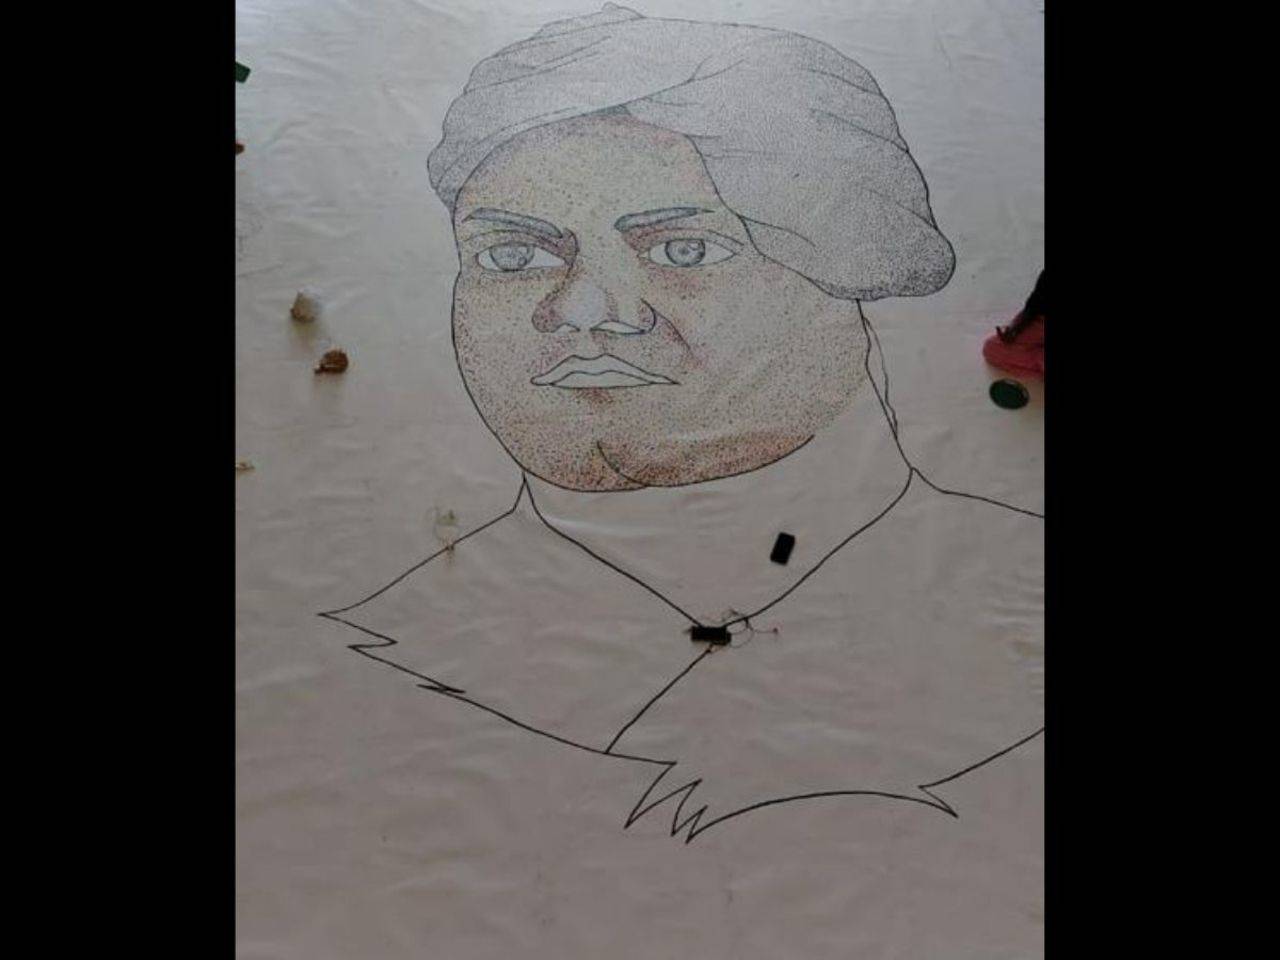 Swamy vivekananda pencil portrait by nanirockson23 on DeviantArt